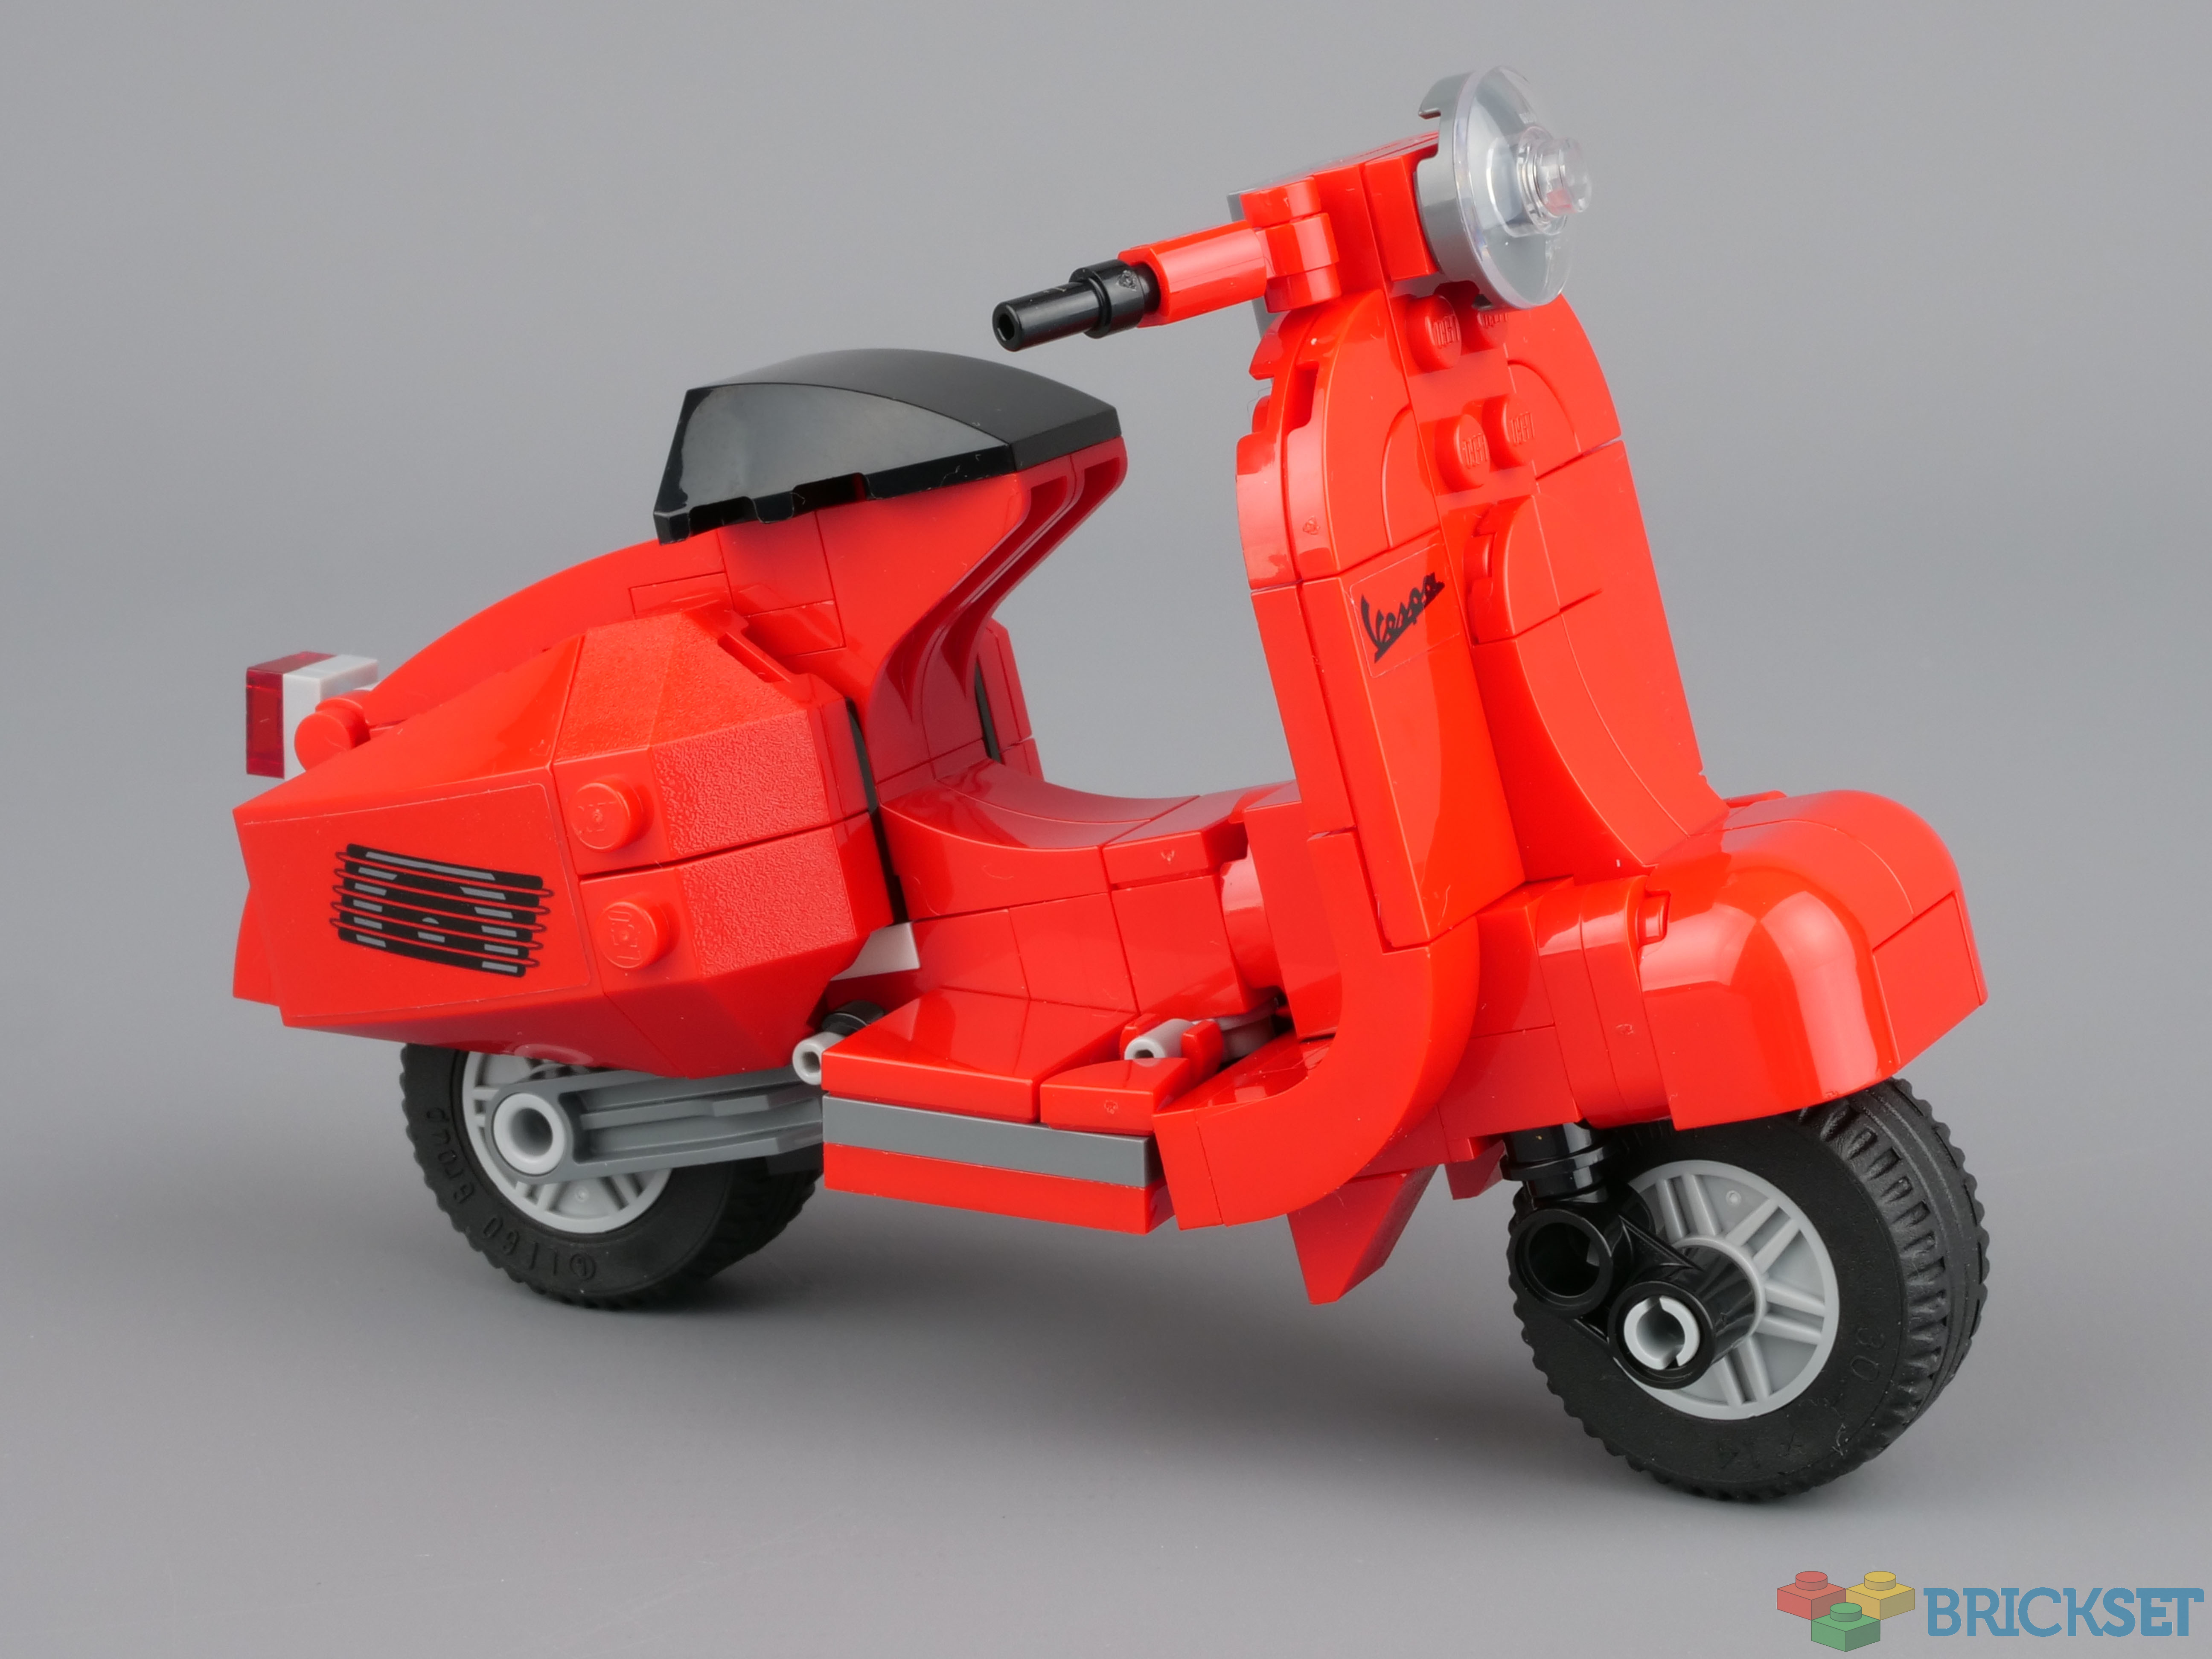 LEGO VESPA 125 Build & Review 